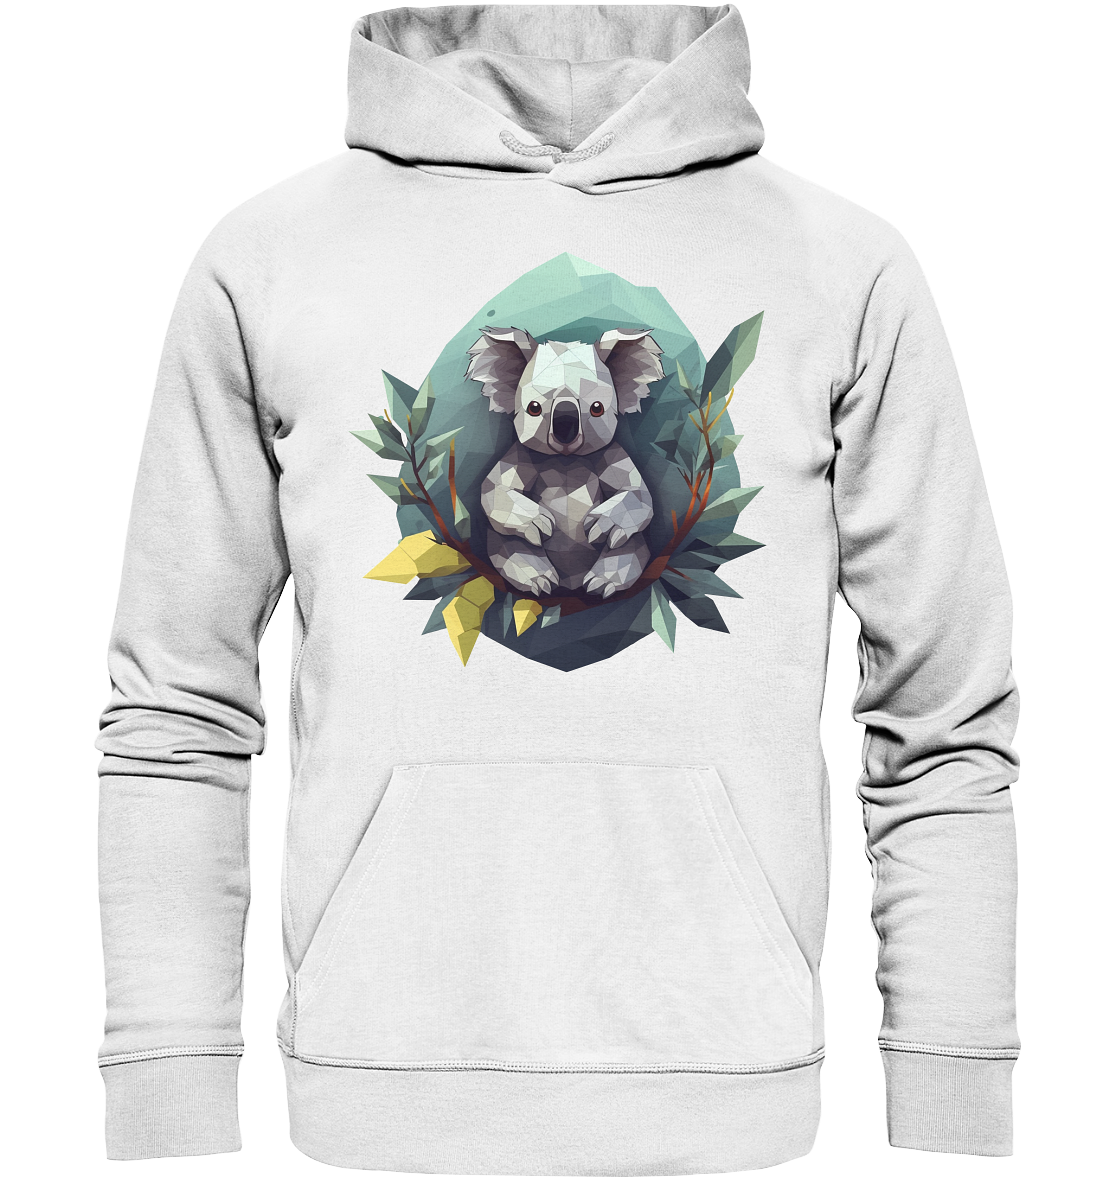 Unisex Bio-Hoodie mit Koala "Polygon Koala" - Mindprints Design